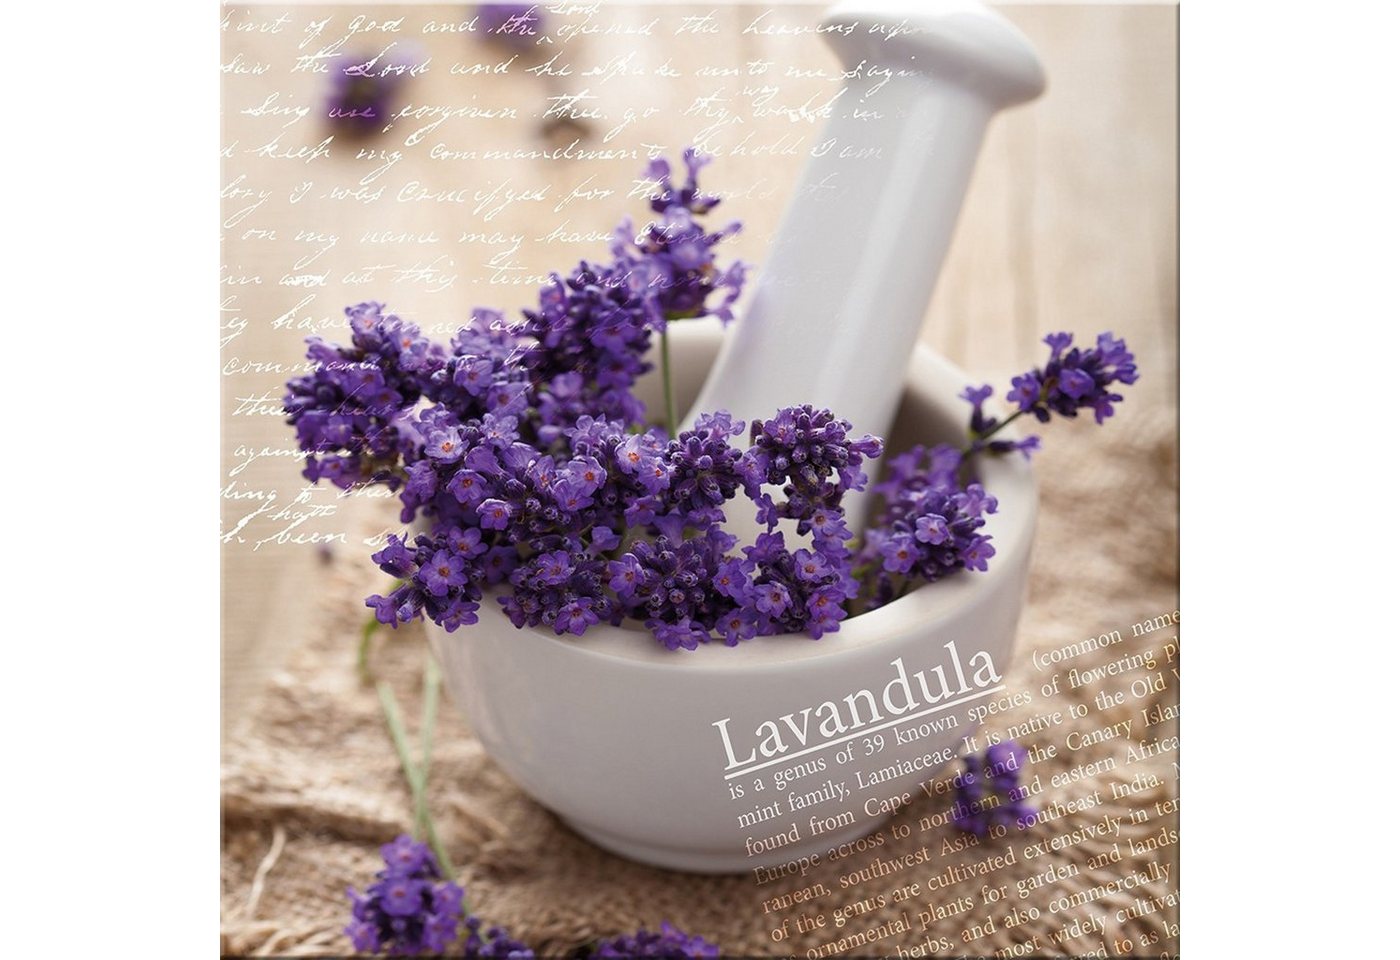 artissimo Glasbild Glasbild 30x30cm BIld Wellness Blumen Lavendel lila, Spa: Lavendel von artissimo